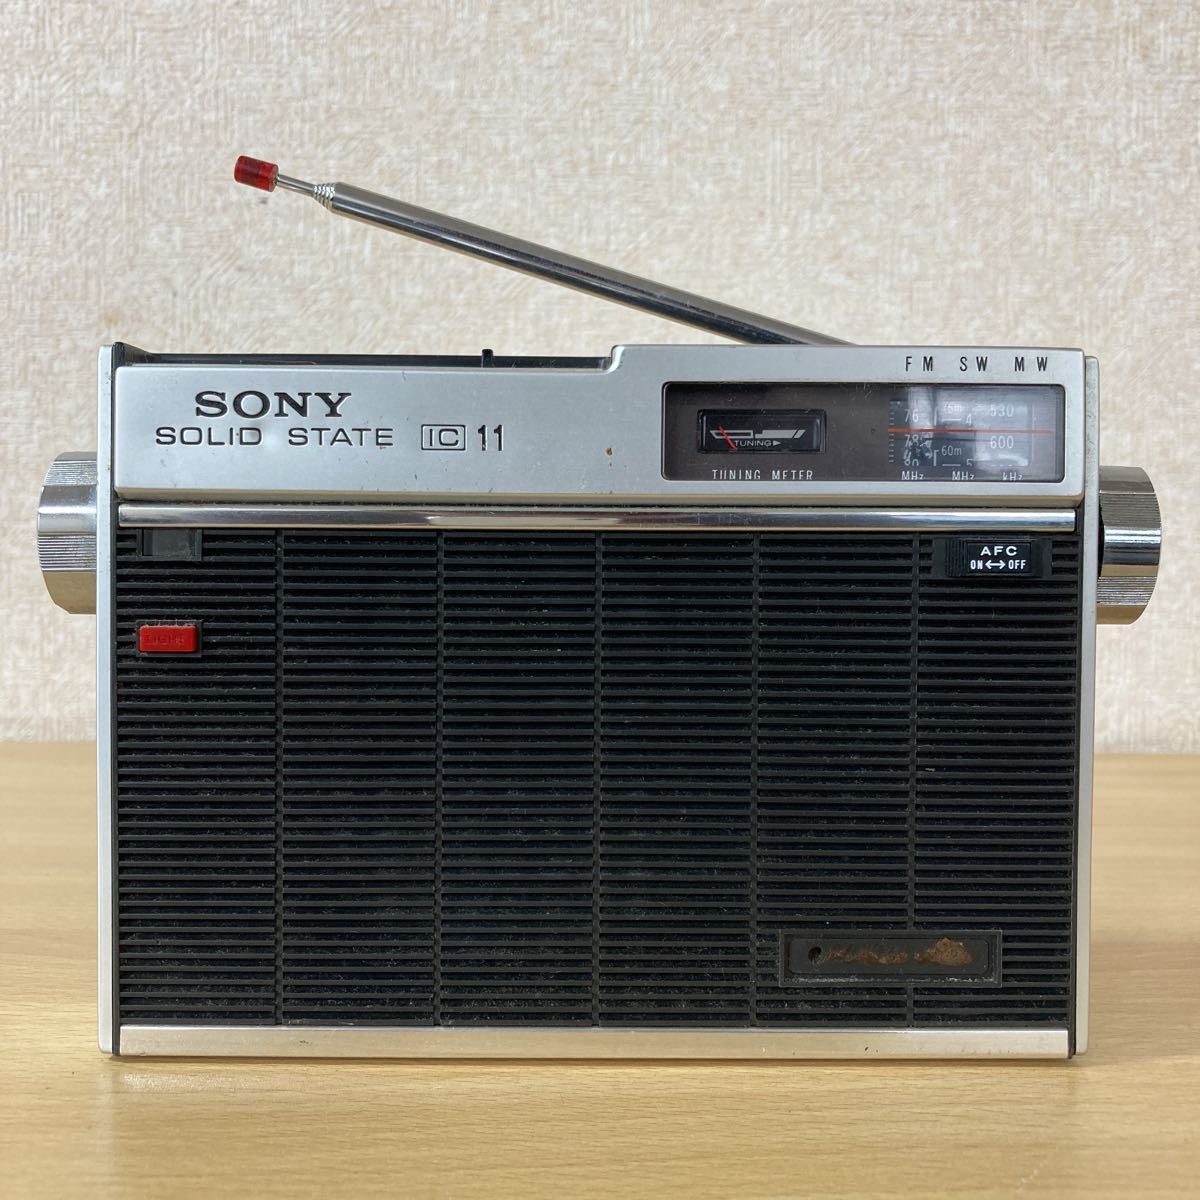 SONY ソニー SOLID STATE IC 11 ICF-110 ラジオ 昭和レトロ